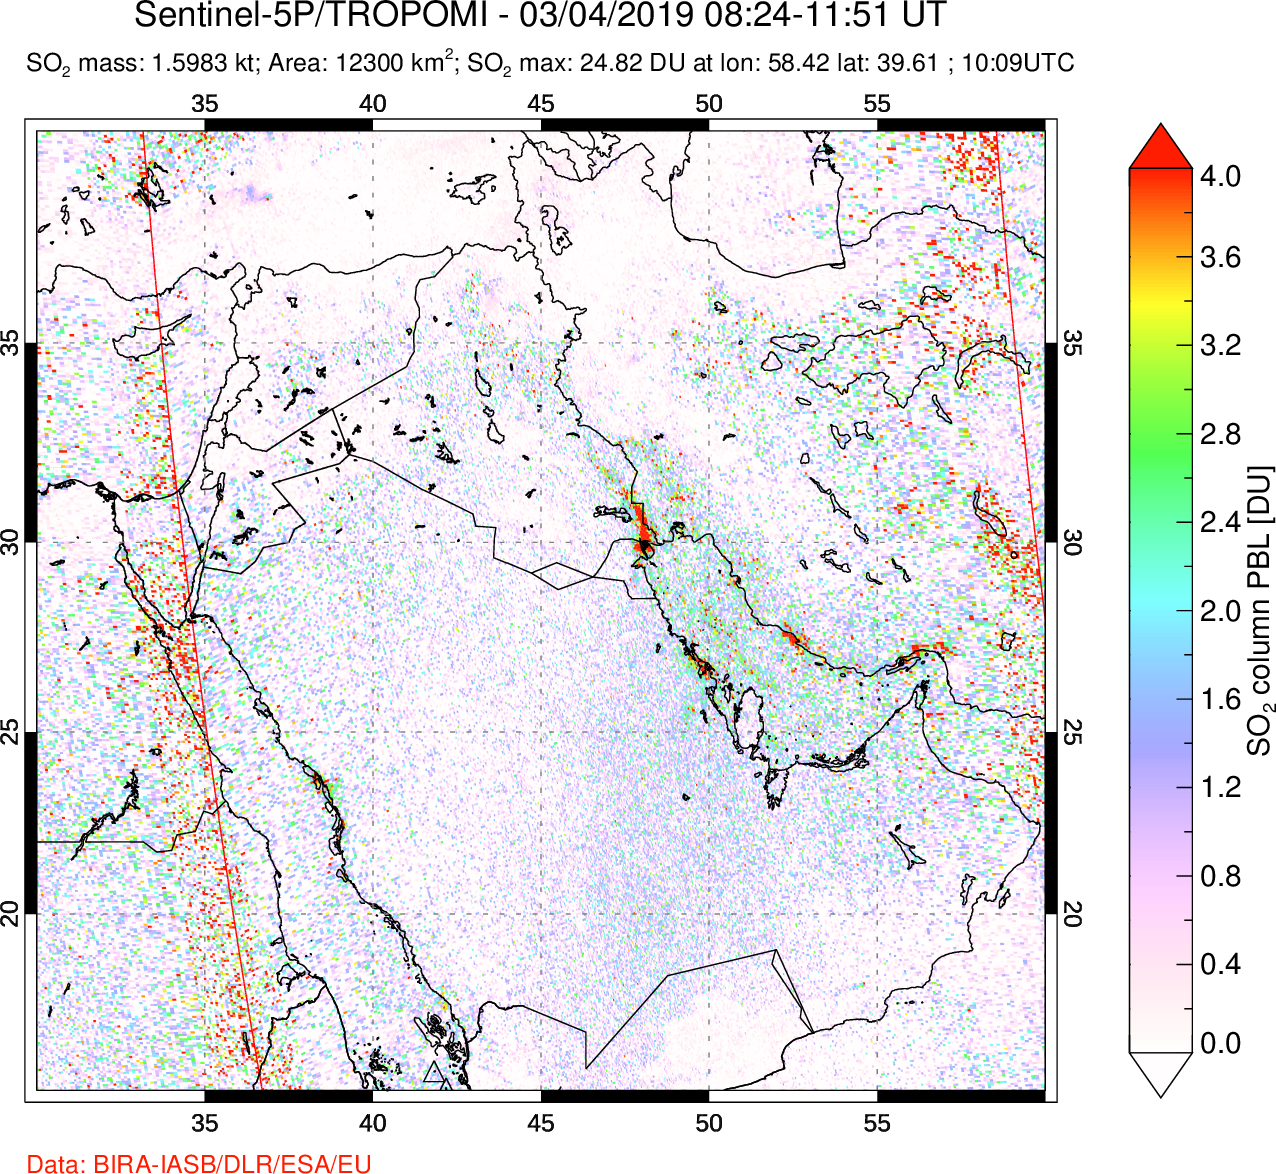 A sulfur dioxide image over Middle East on Mar 04, 2019.